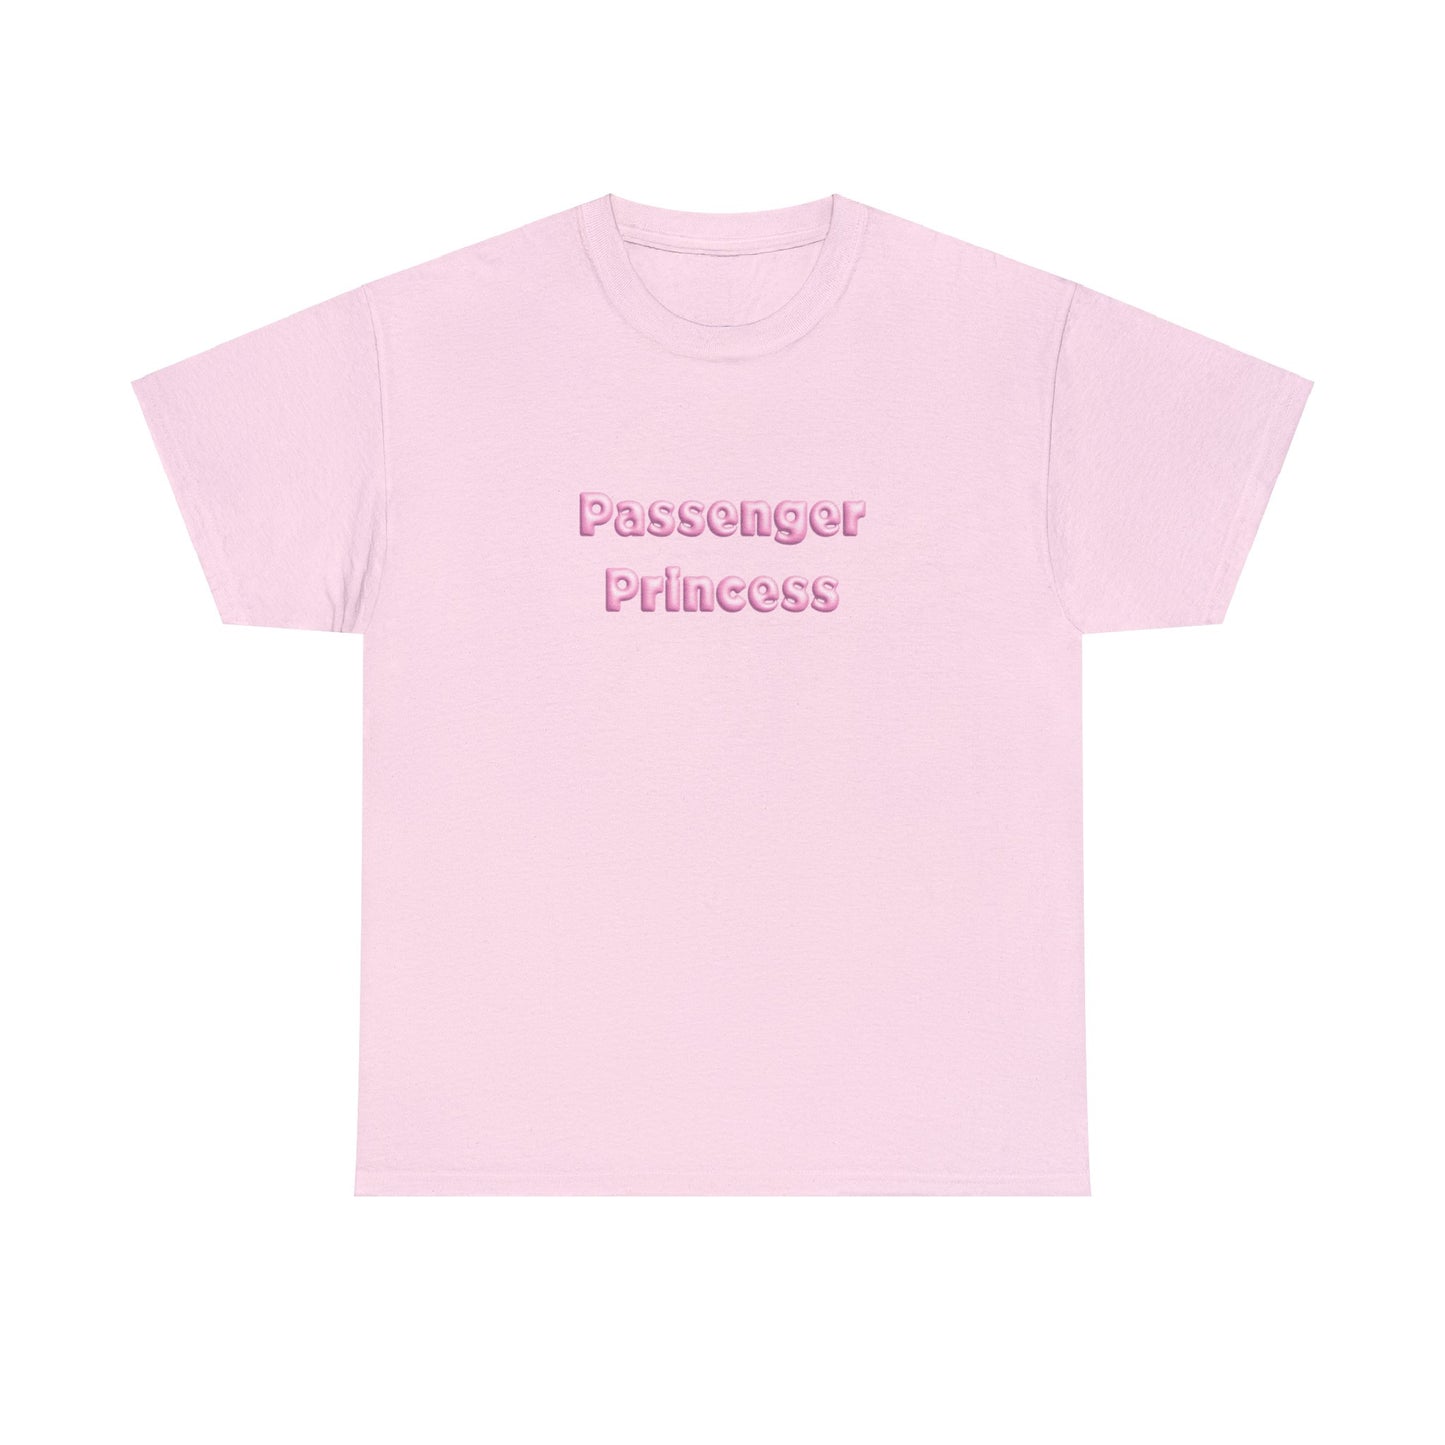 Passenger Princess Classic T-Shirt